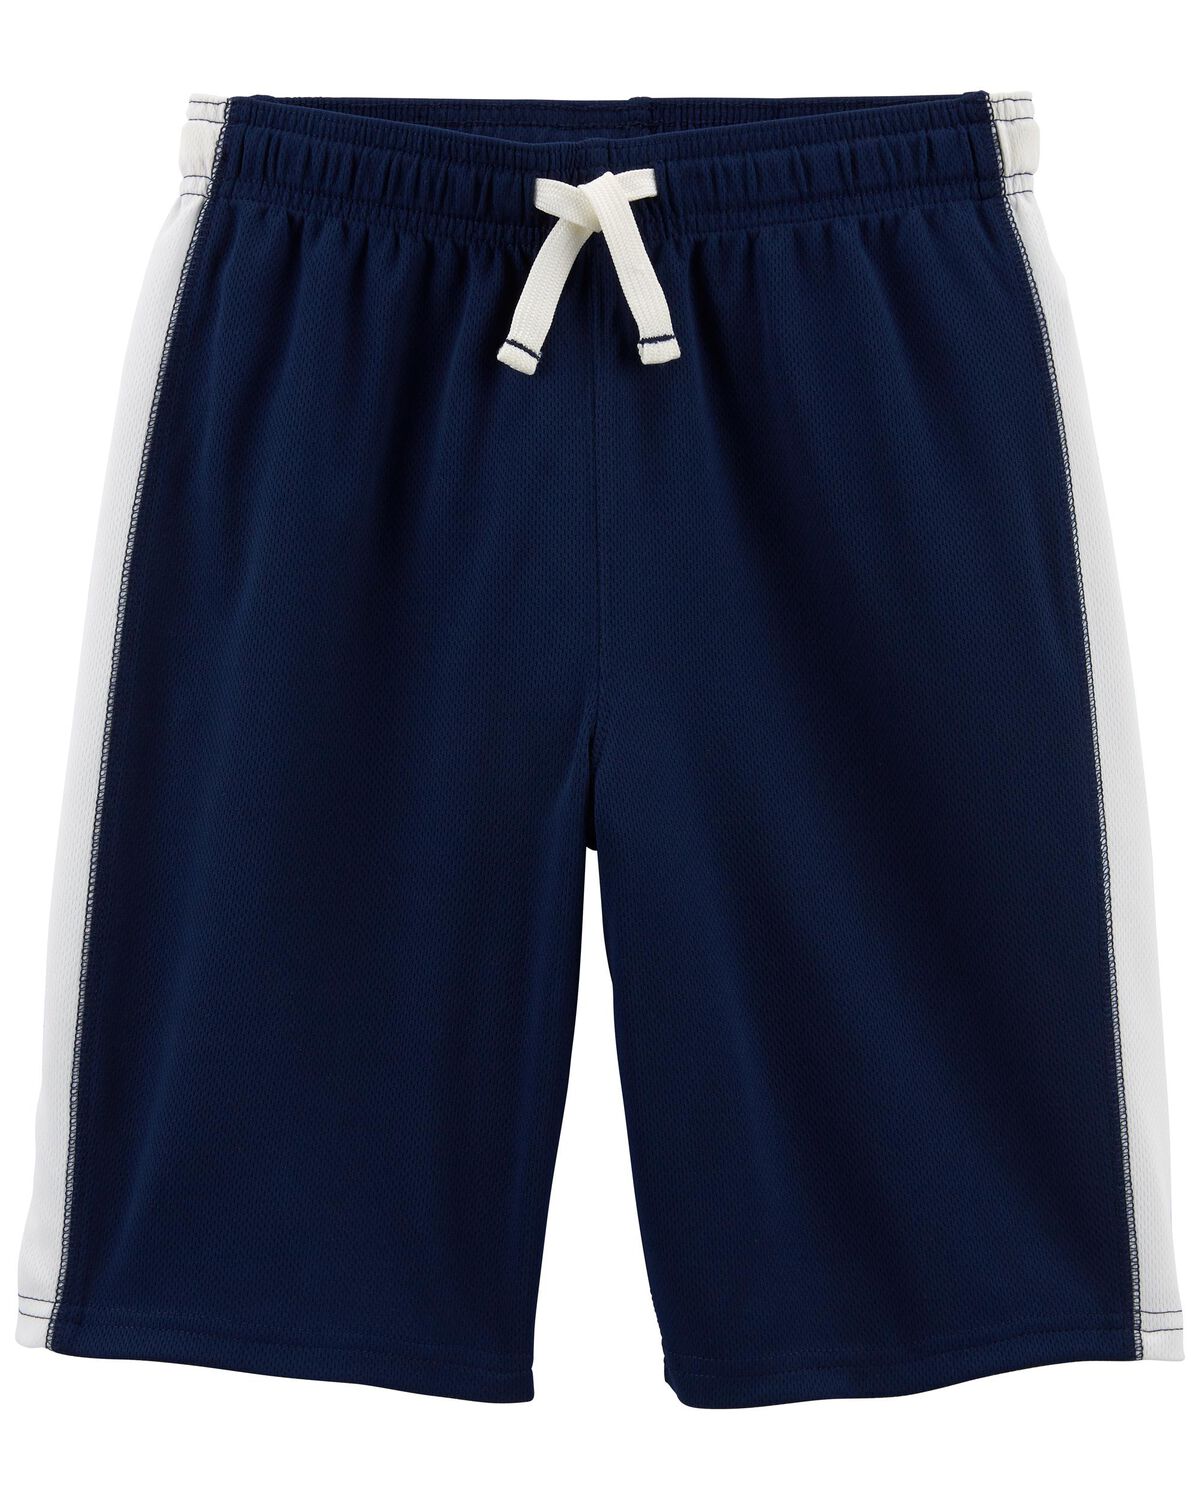 Navy Kid Active Mesh Shorts | oshkosh.com